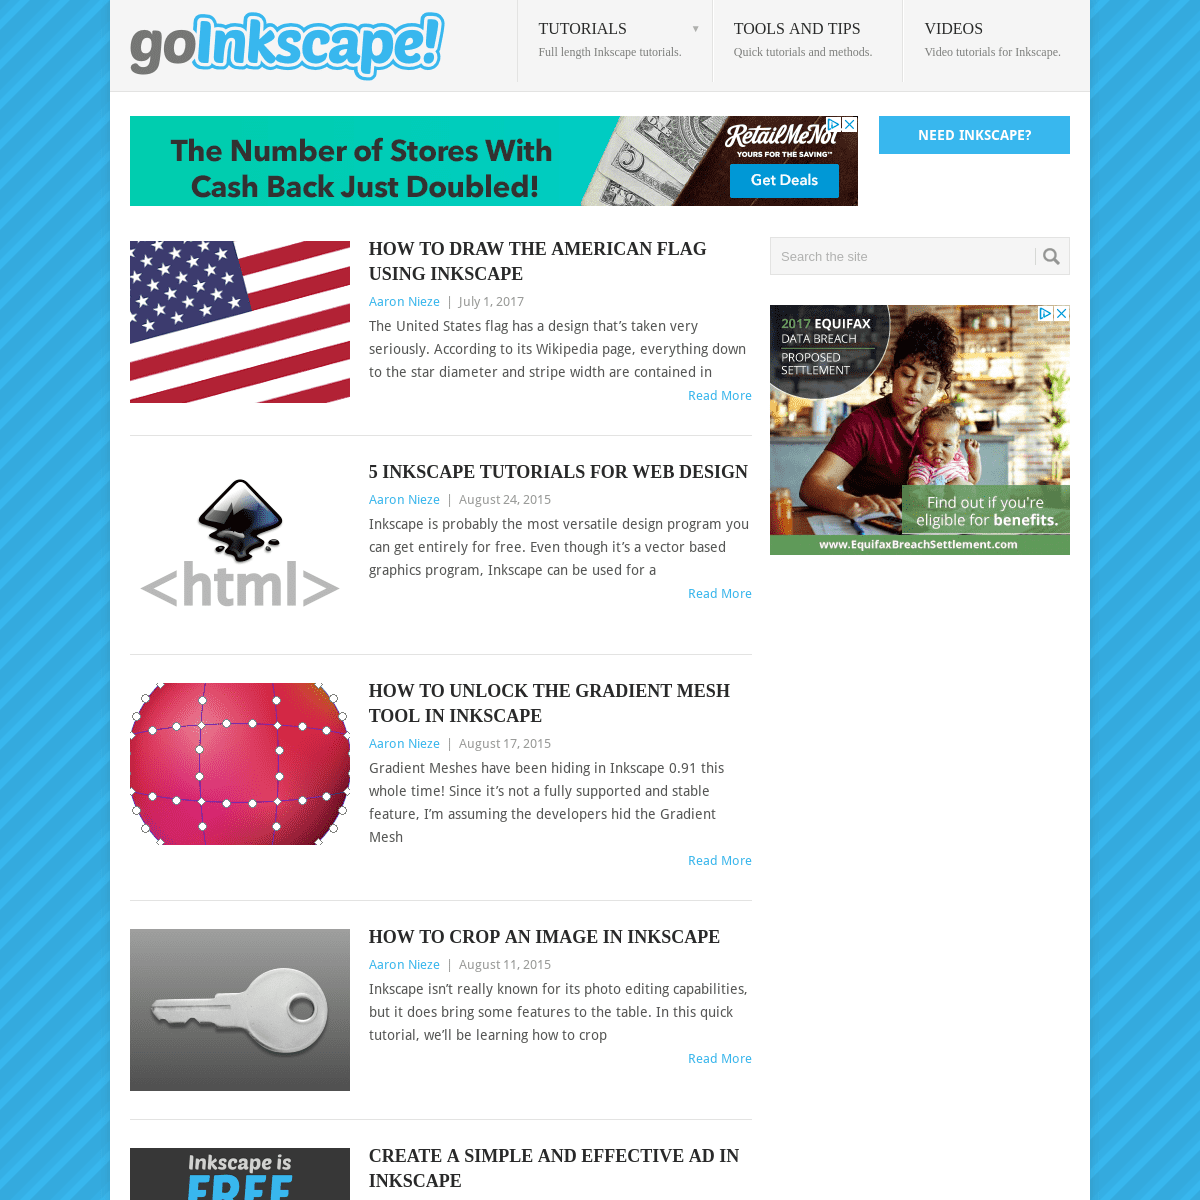 A complete backup of goinkscape.com